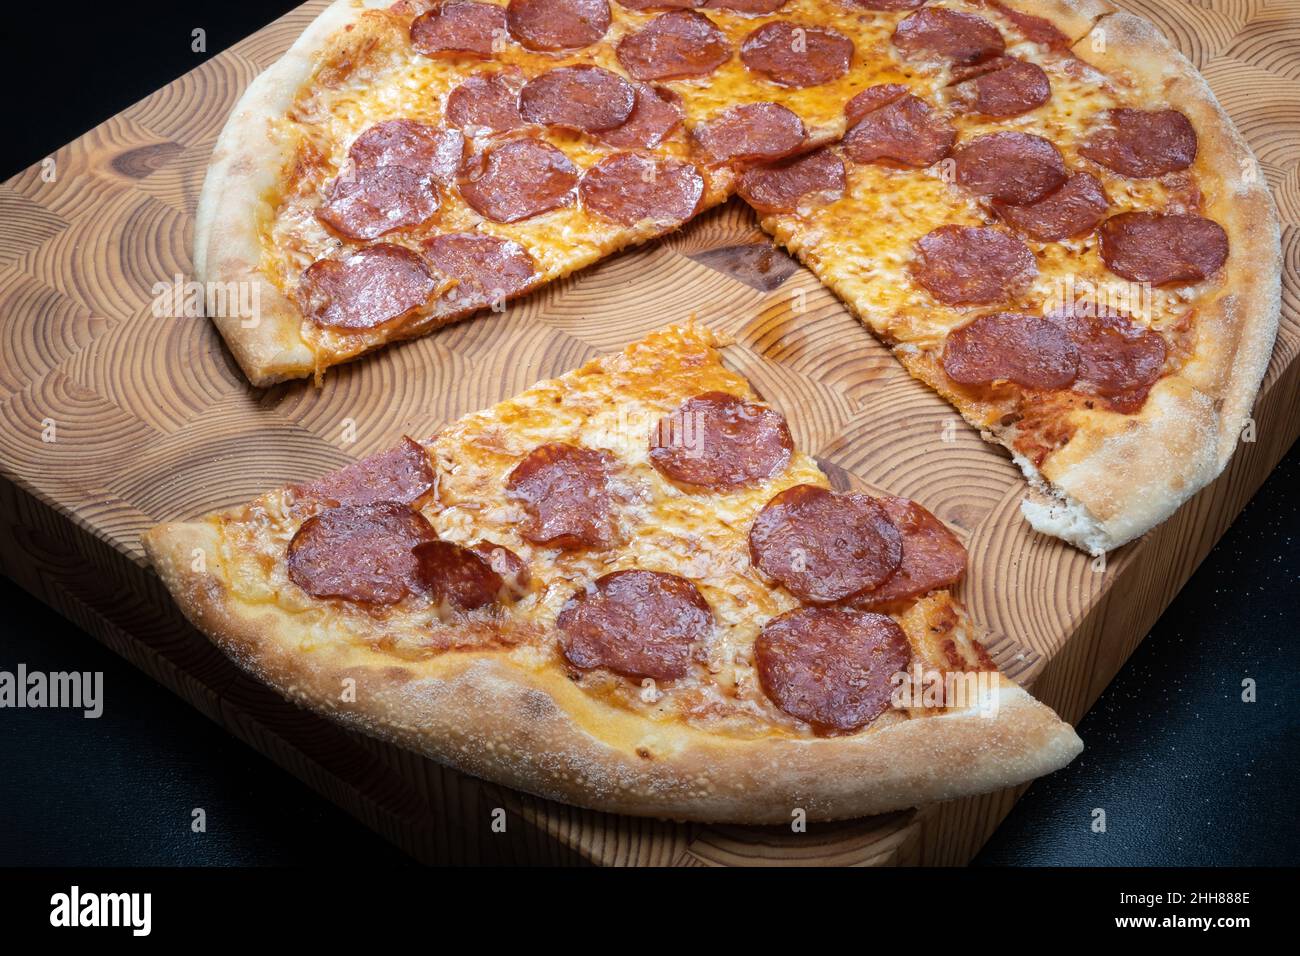 Helsinki / Finland - JANUARY 22, 2022: Closeup of homemade New York style double pepperoni pizza. Stock Photo